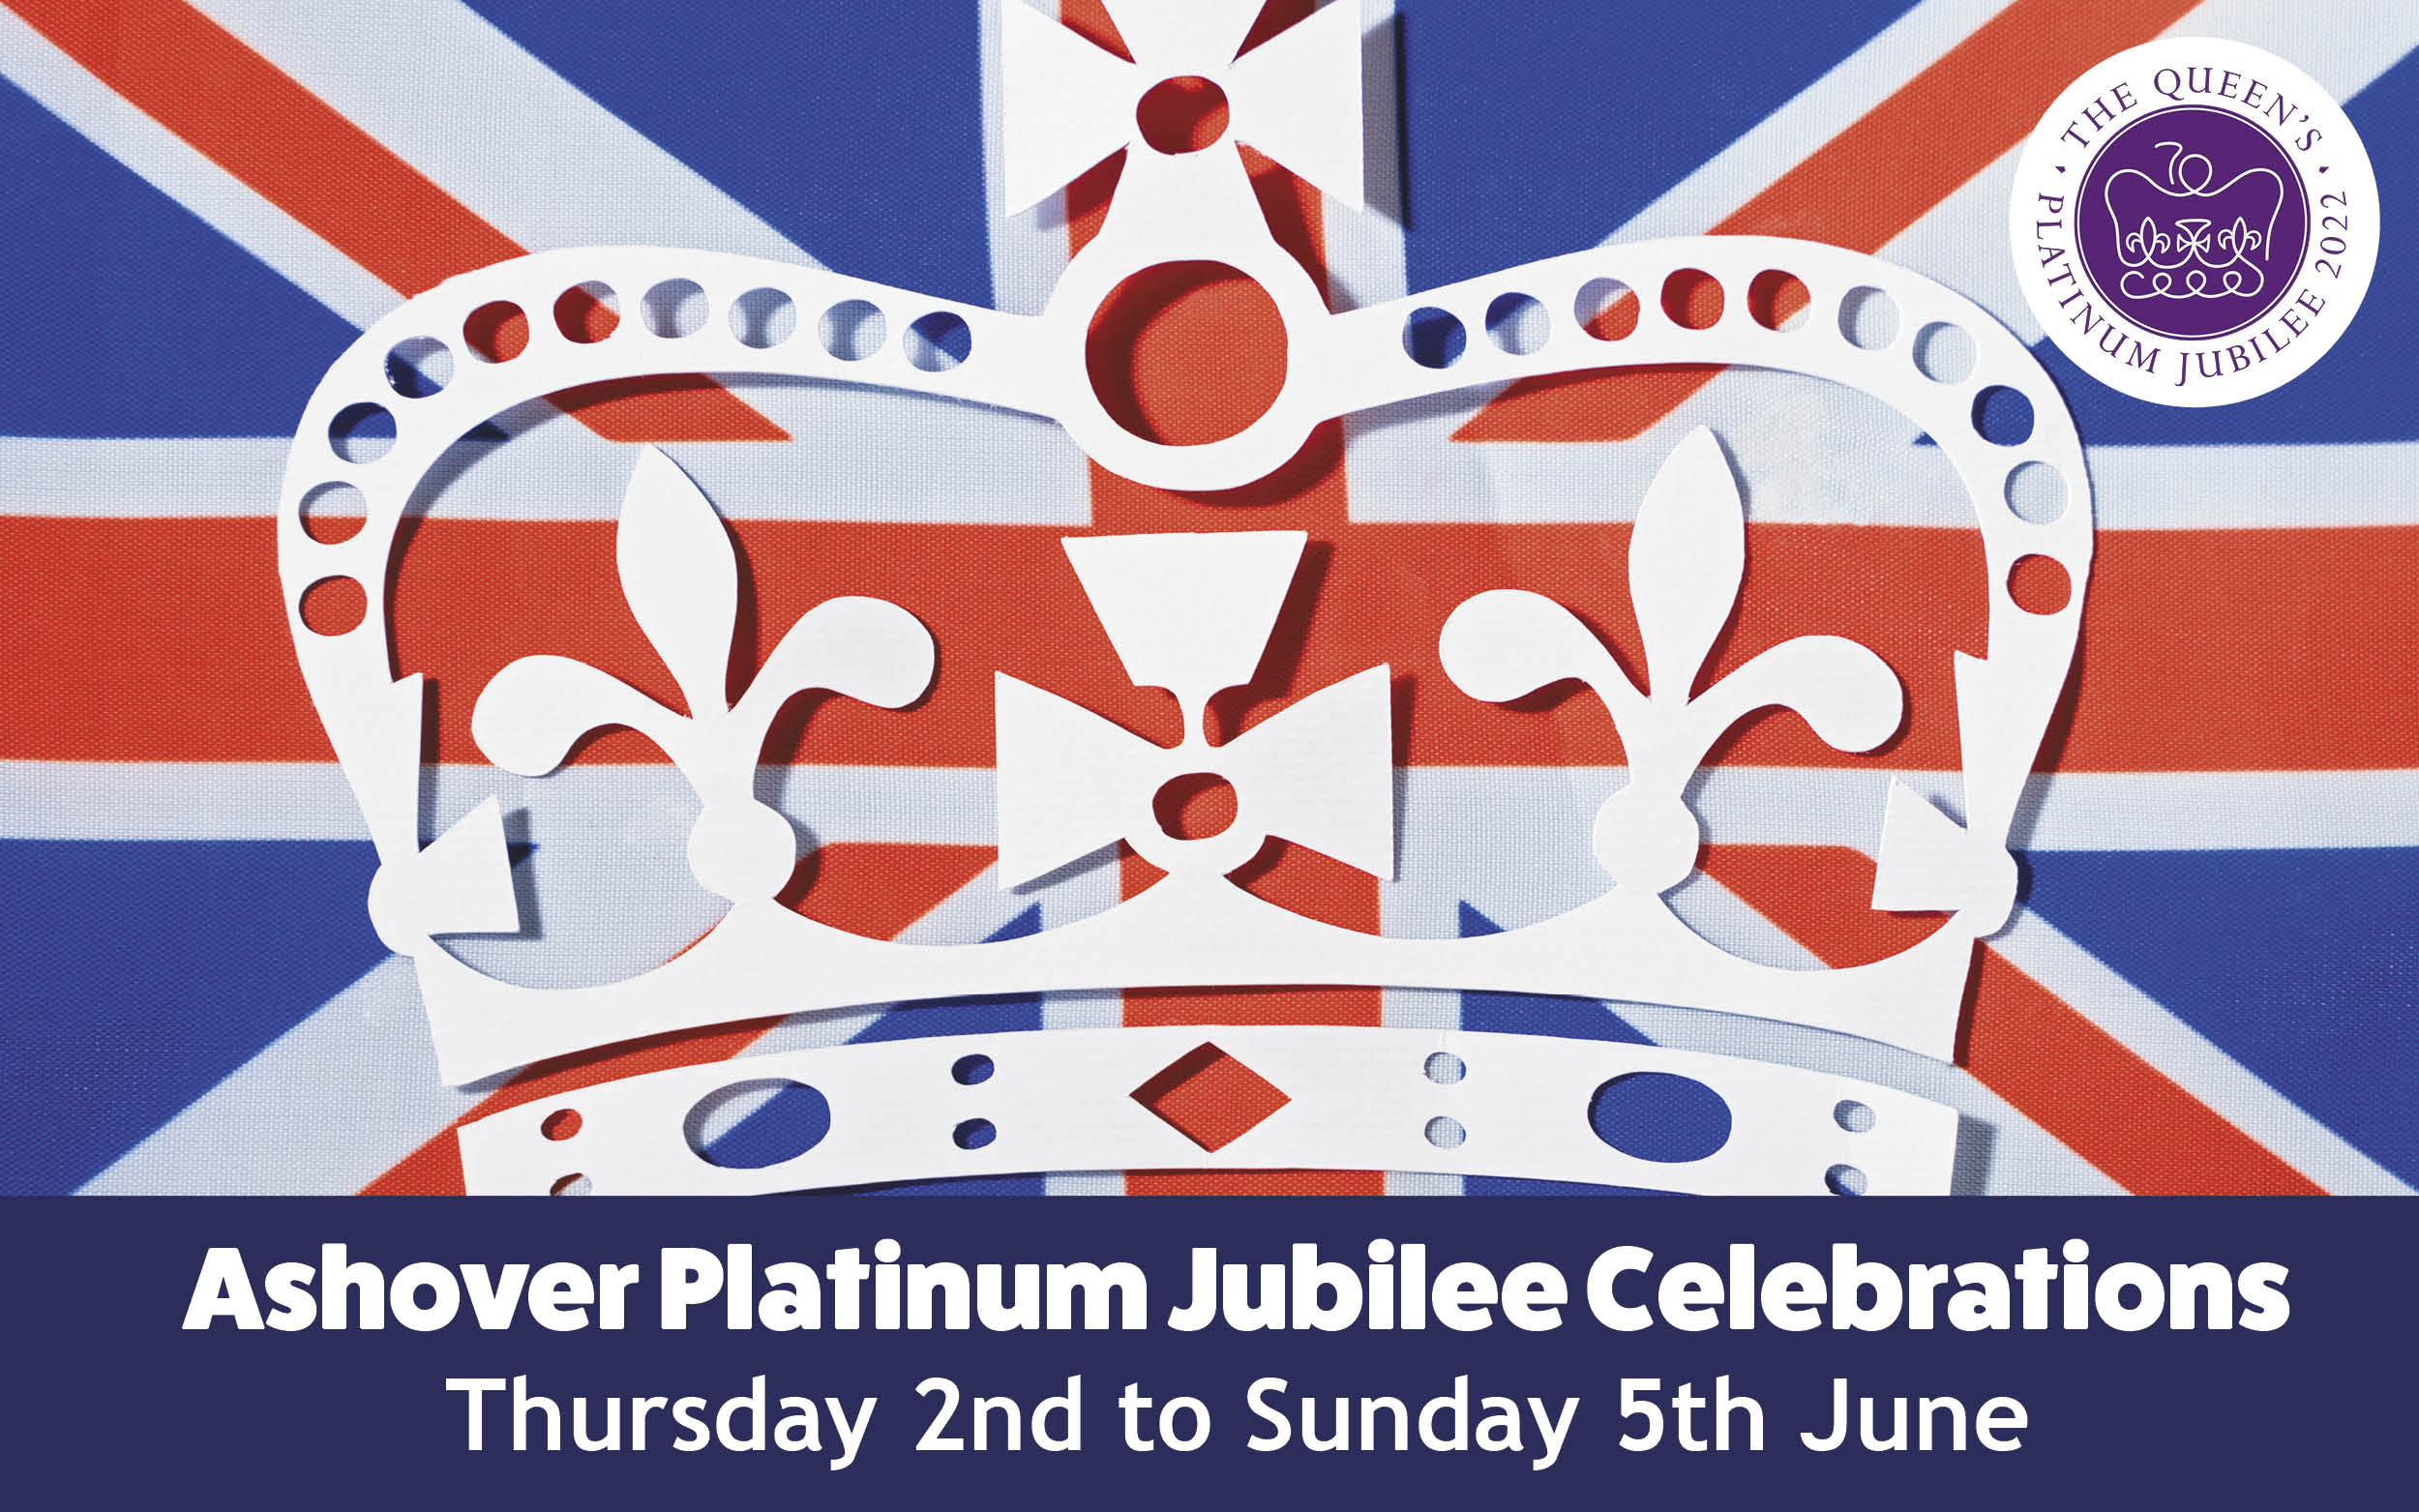 Ashover Platinum Jubilee Celebrations - Help Please!